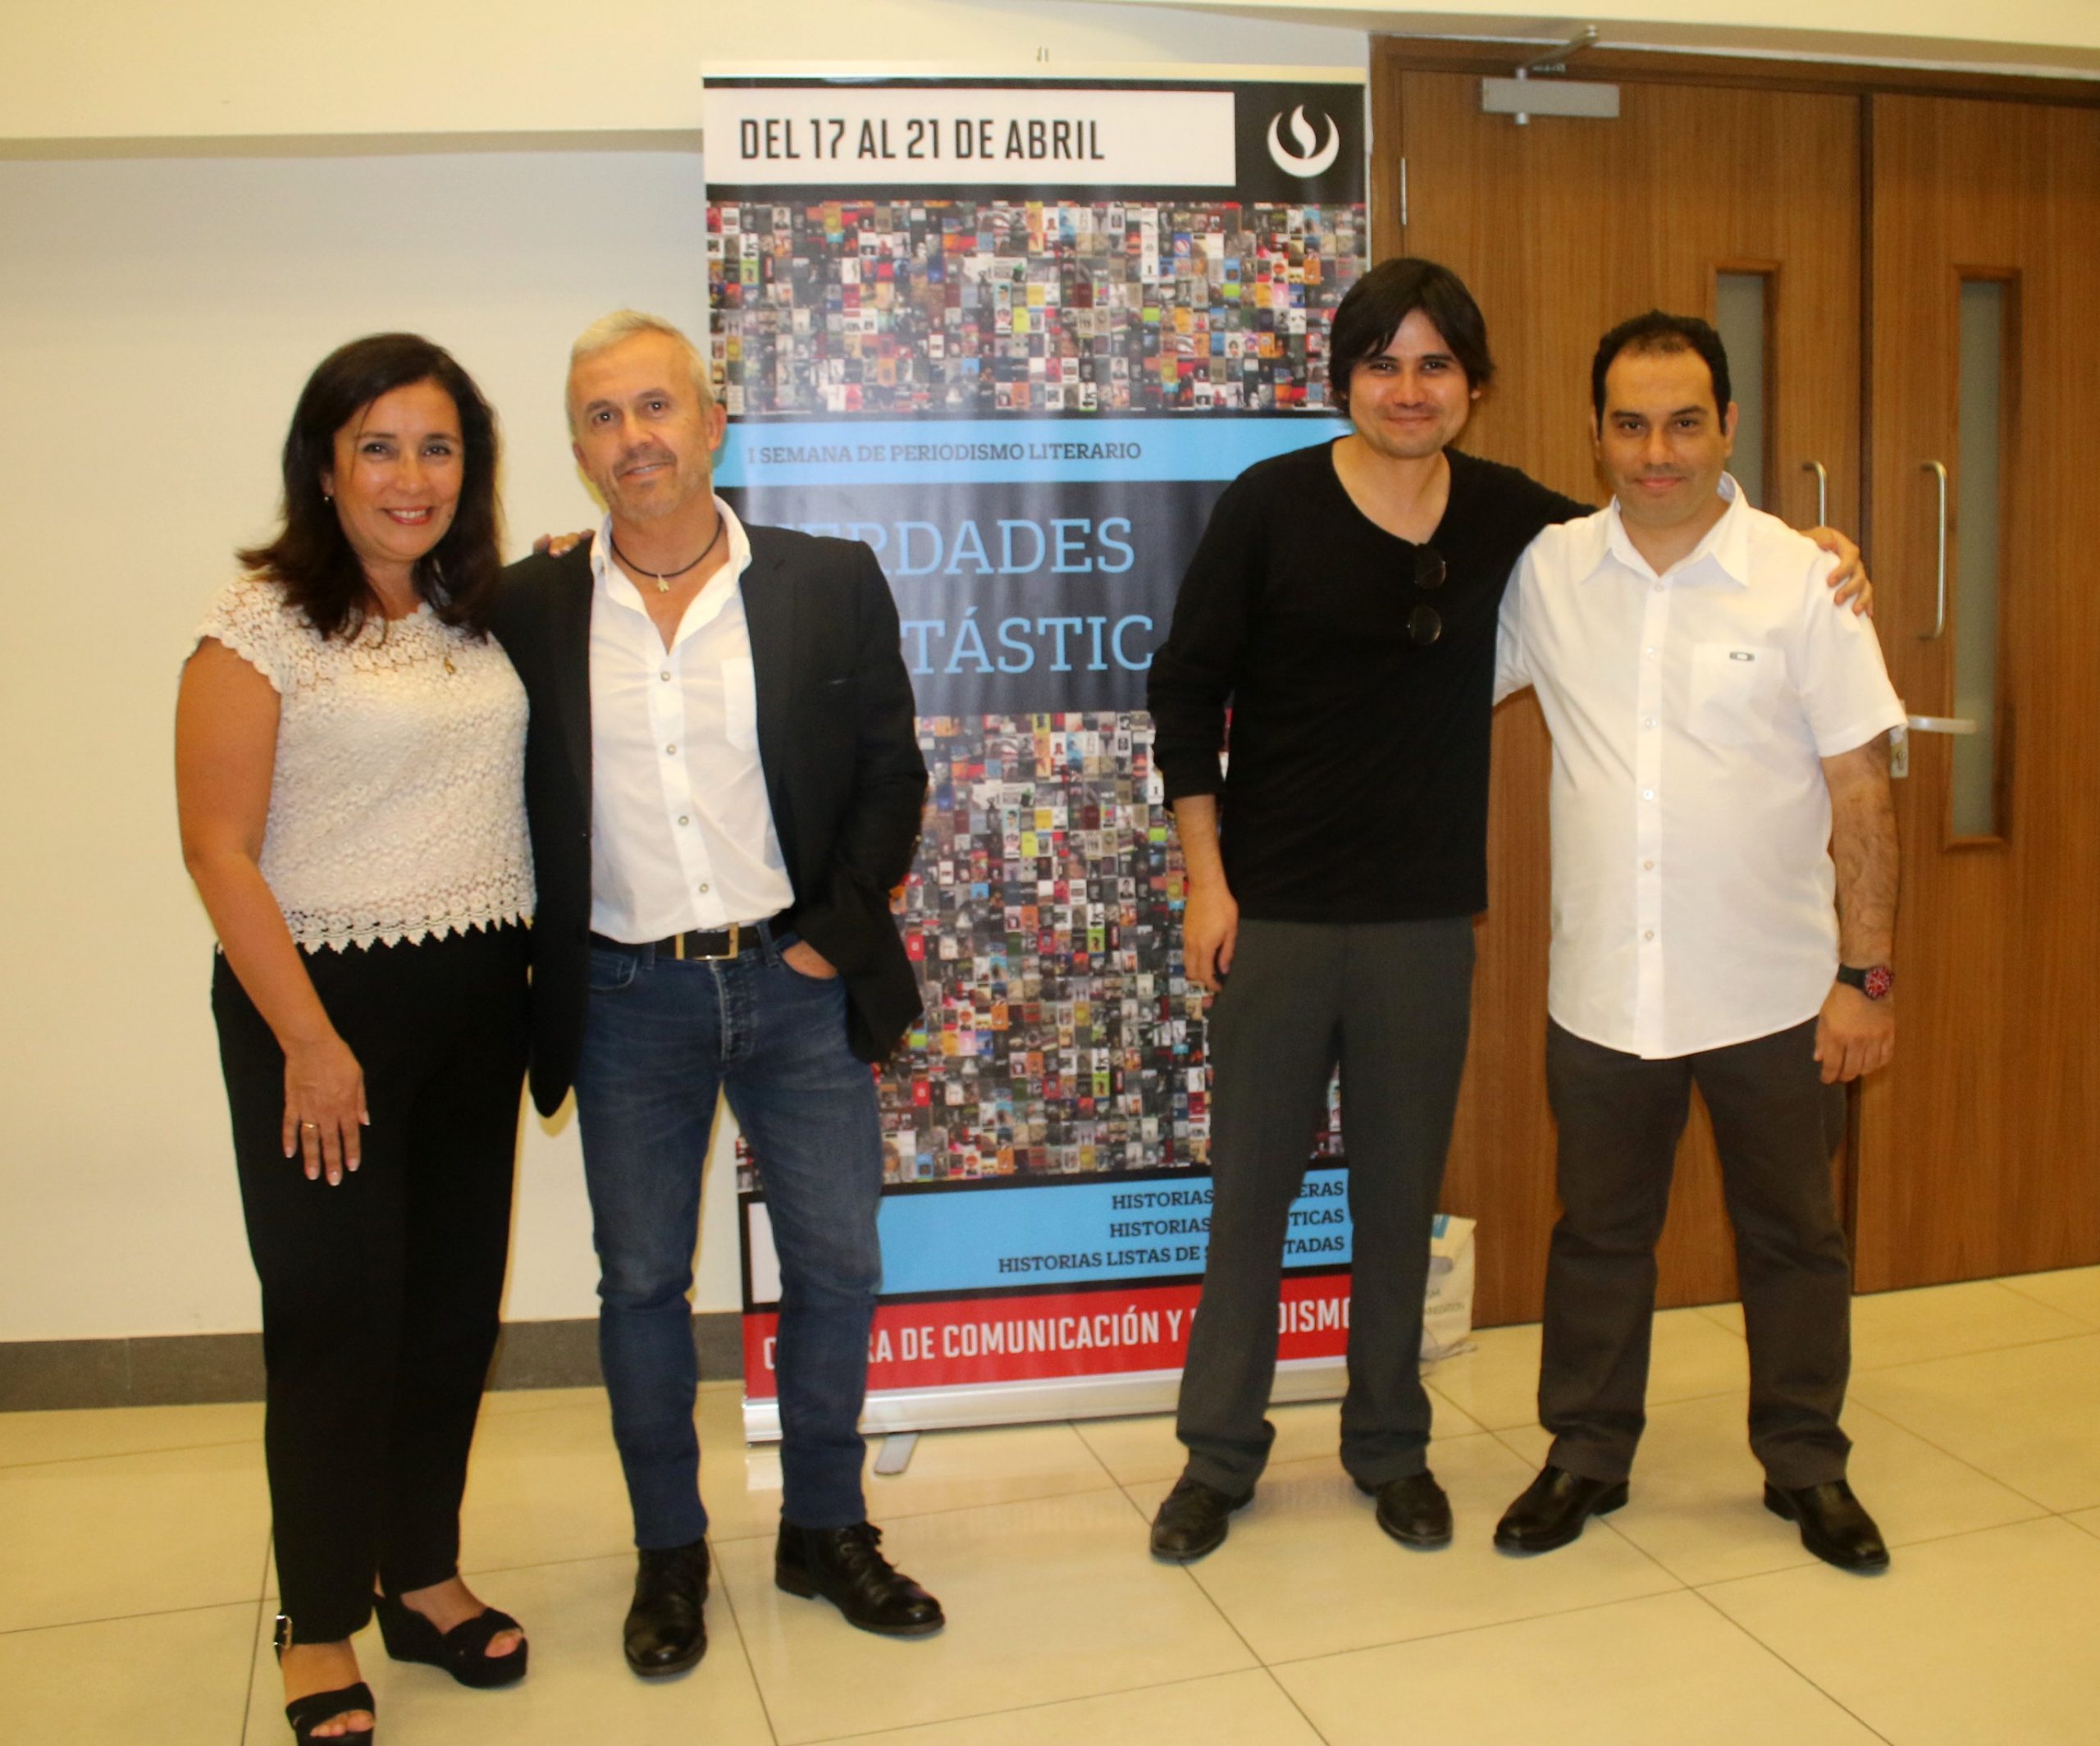 Carrera de Comunicación y Periodismo UPC organizó la I Semana de Periodismo Literario “Verdades Fantásticas”